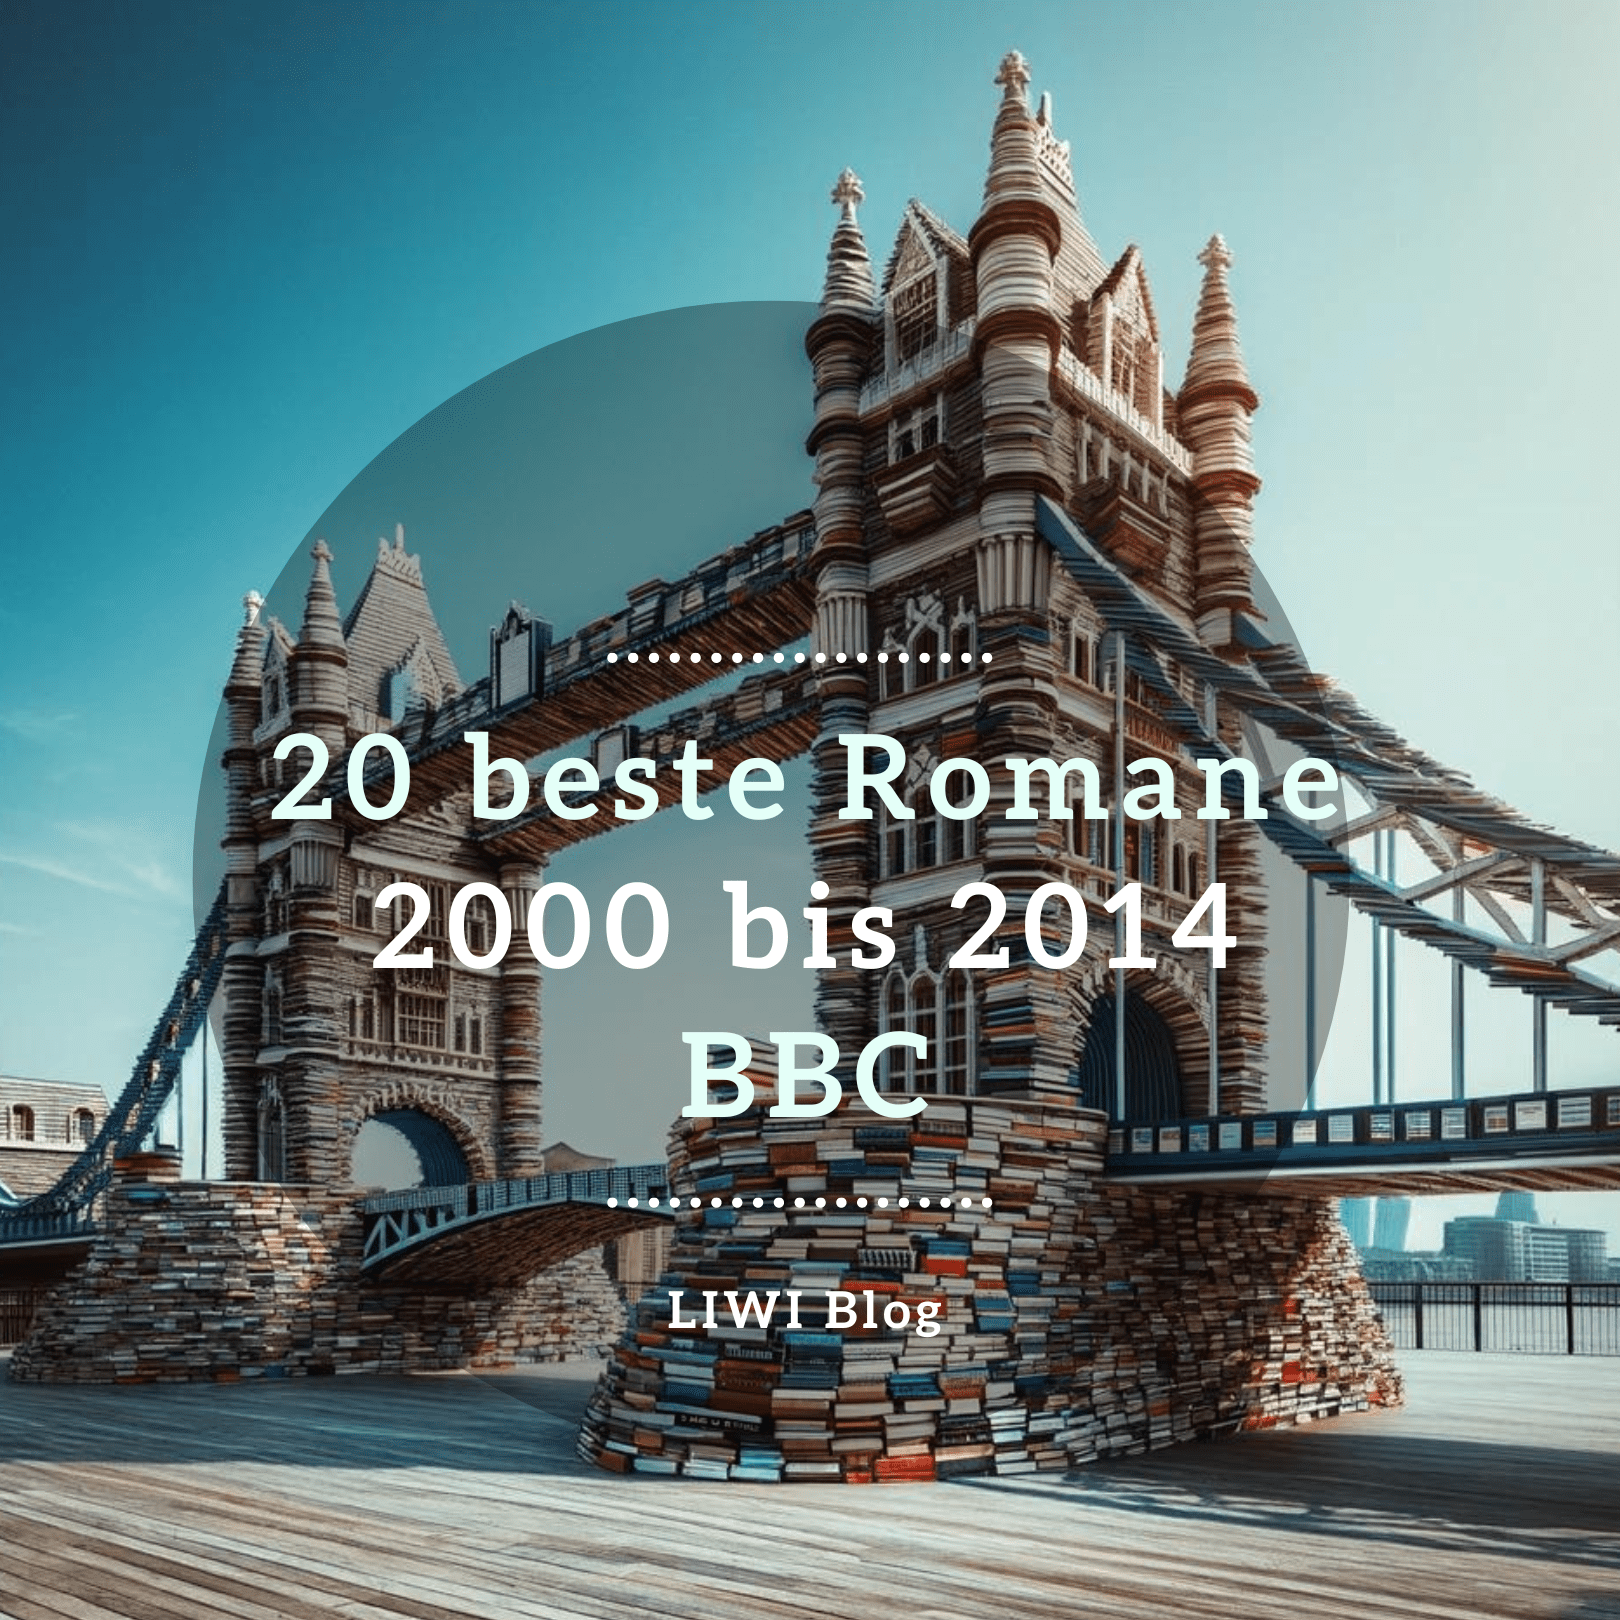 20-beste-romane-2000-2014-bbc